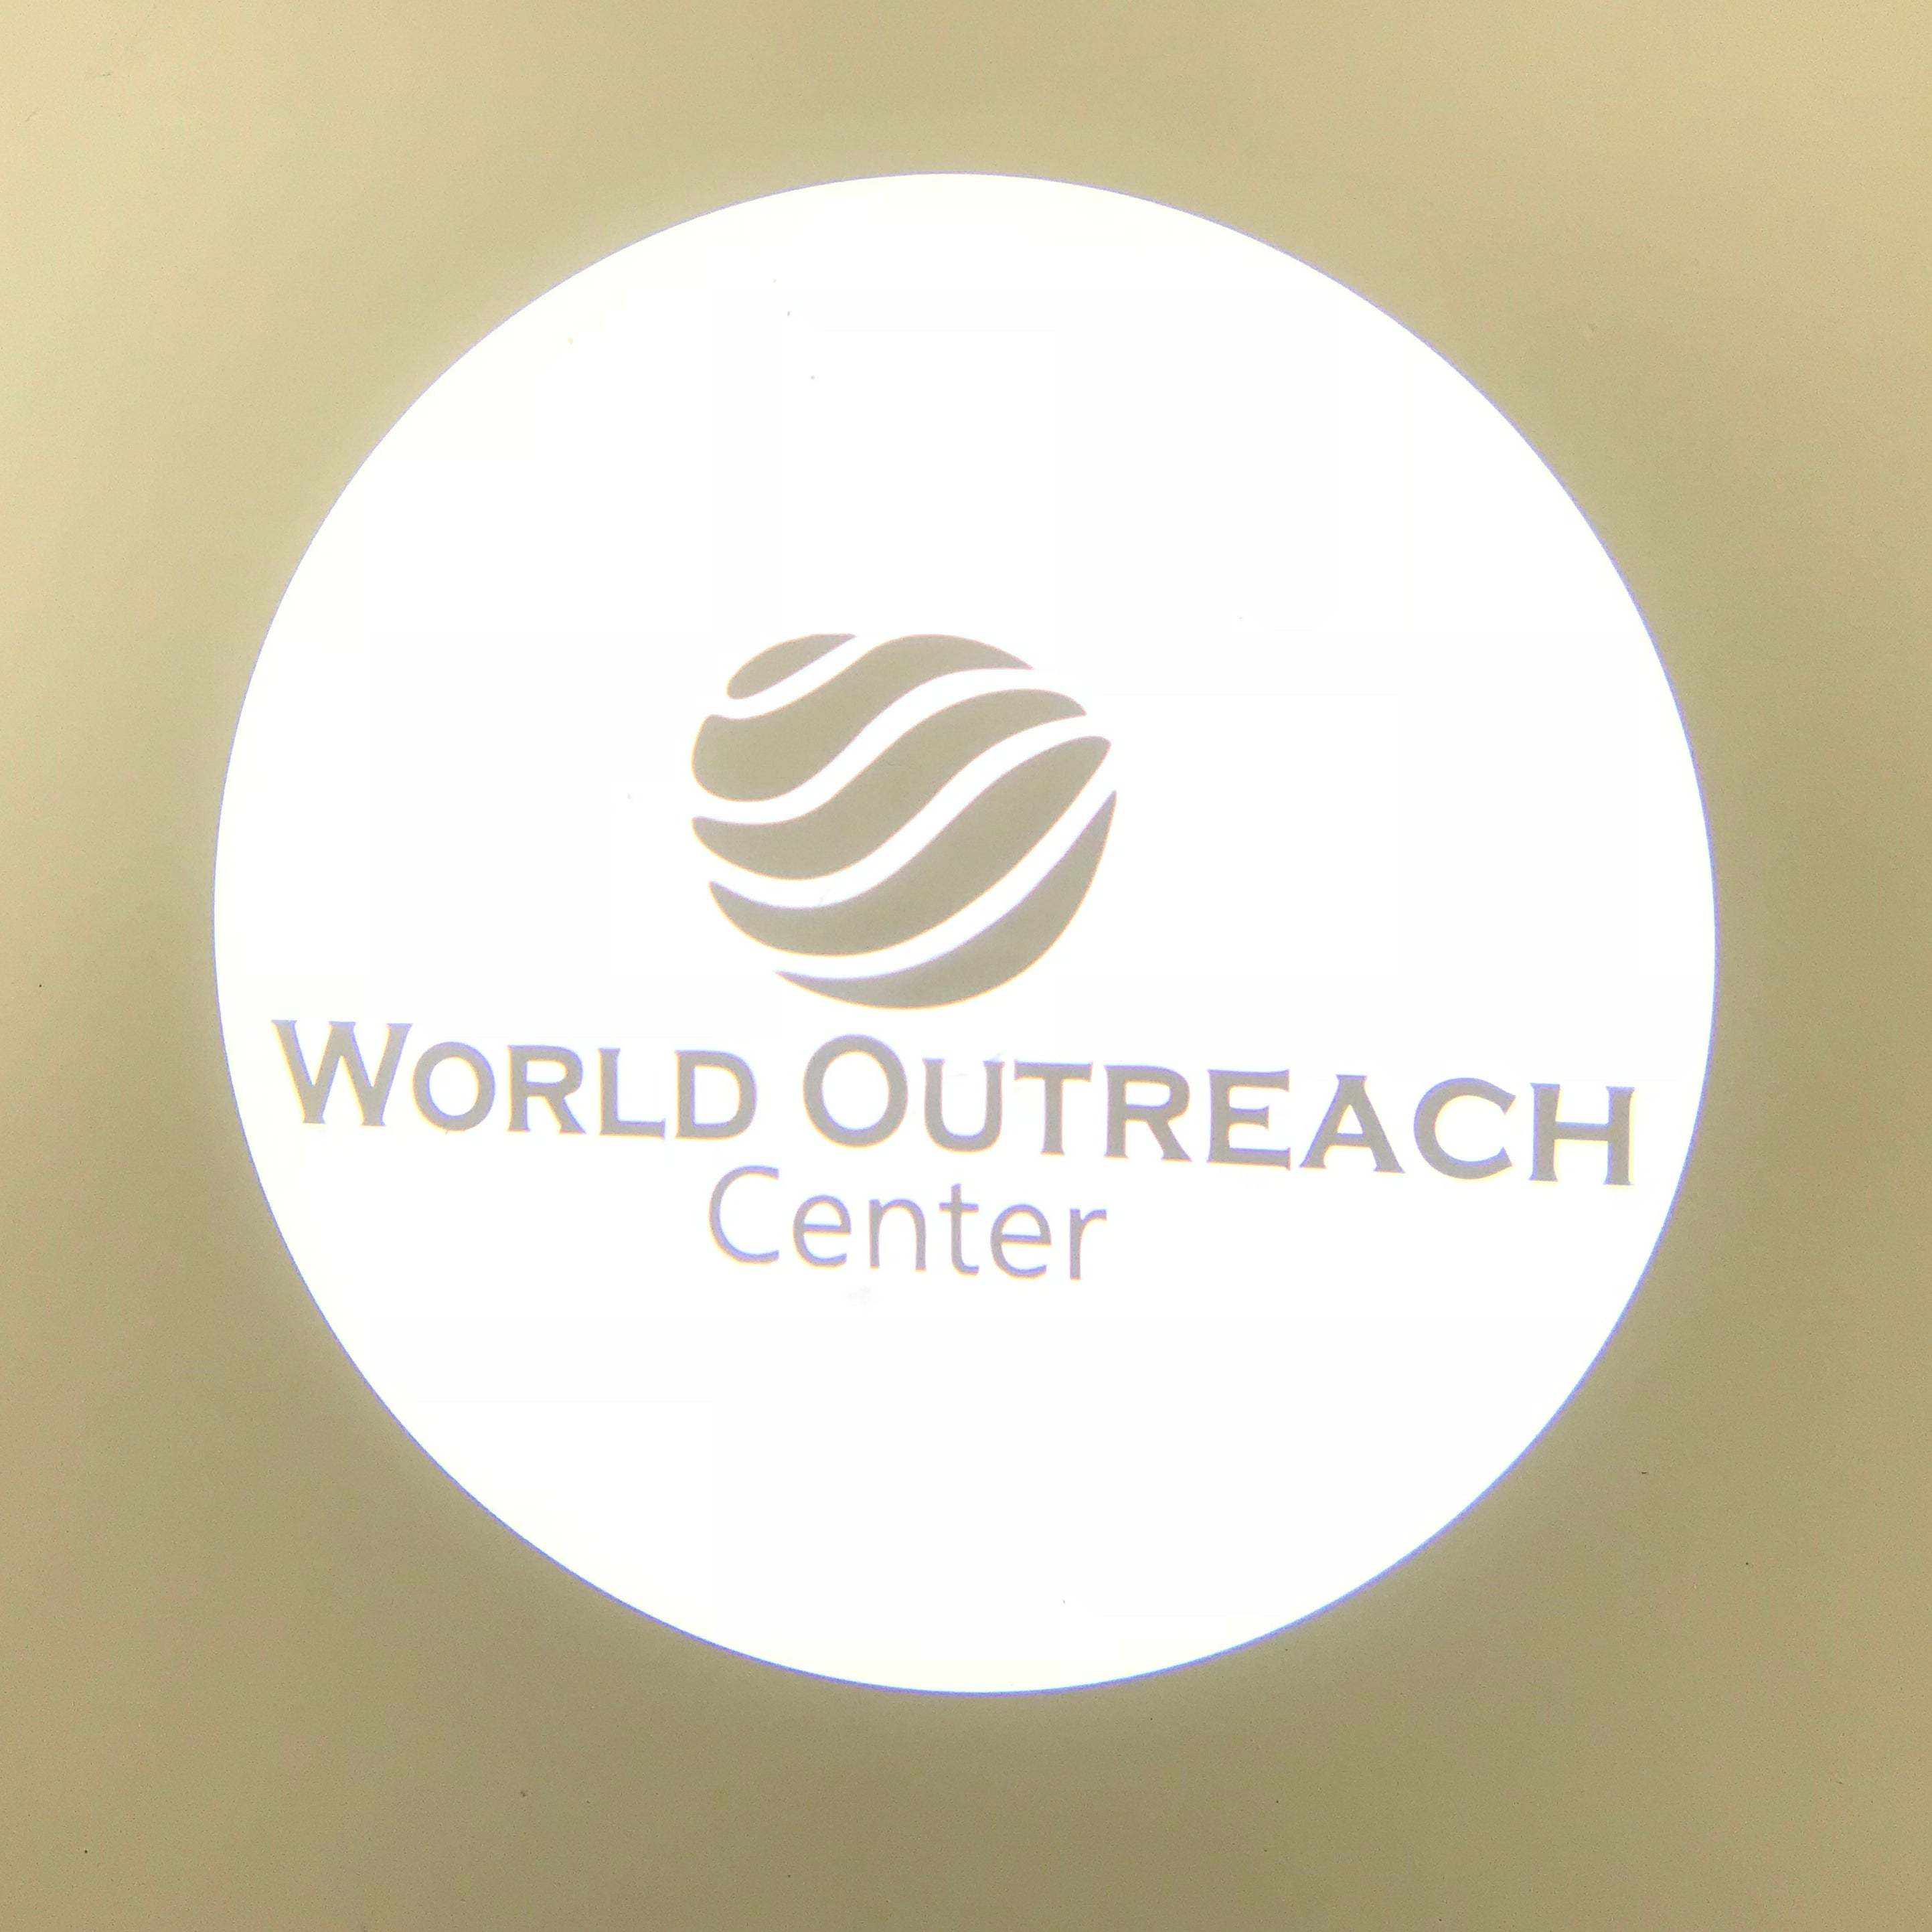 16th April 2018—World Outreach Center